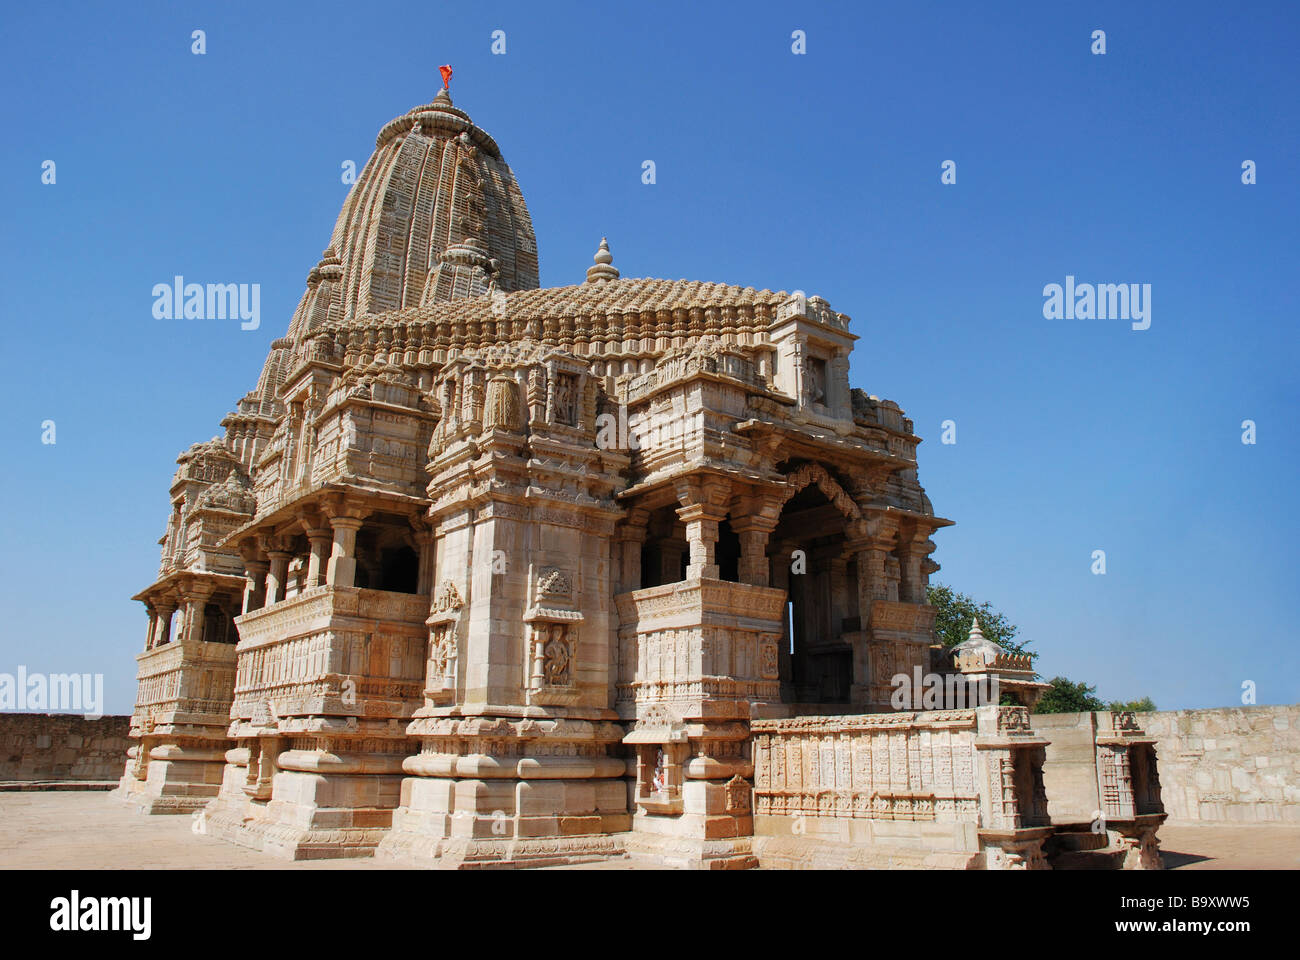 Meera temple, Chittorgarh ( Chittor Fort ), Rajasthan State, India Stock Photo